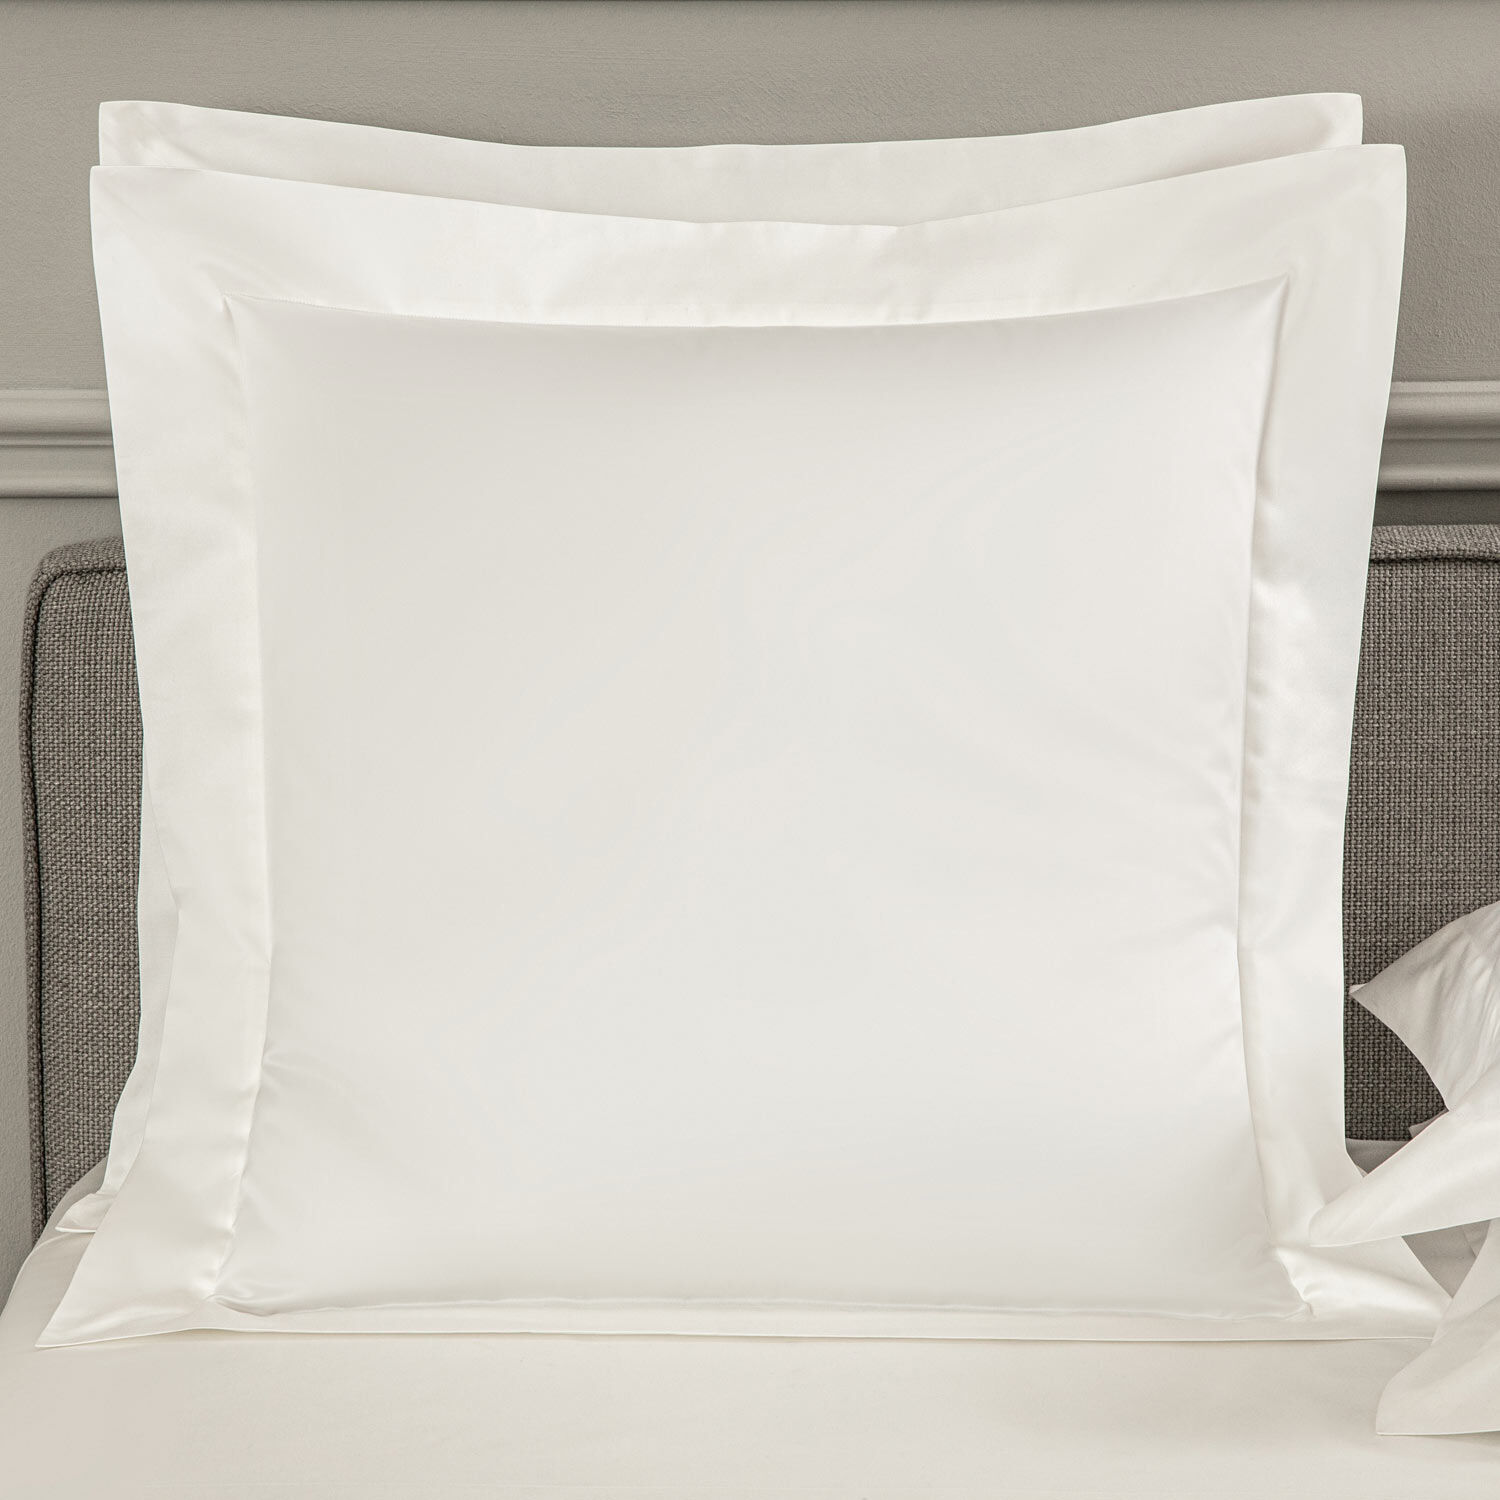 NEW FRETTE  At Home NOTO RICAMO Euro Standard Pillow Shams White Stone Set of 2 